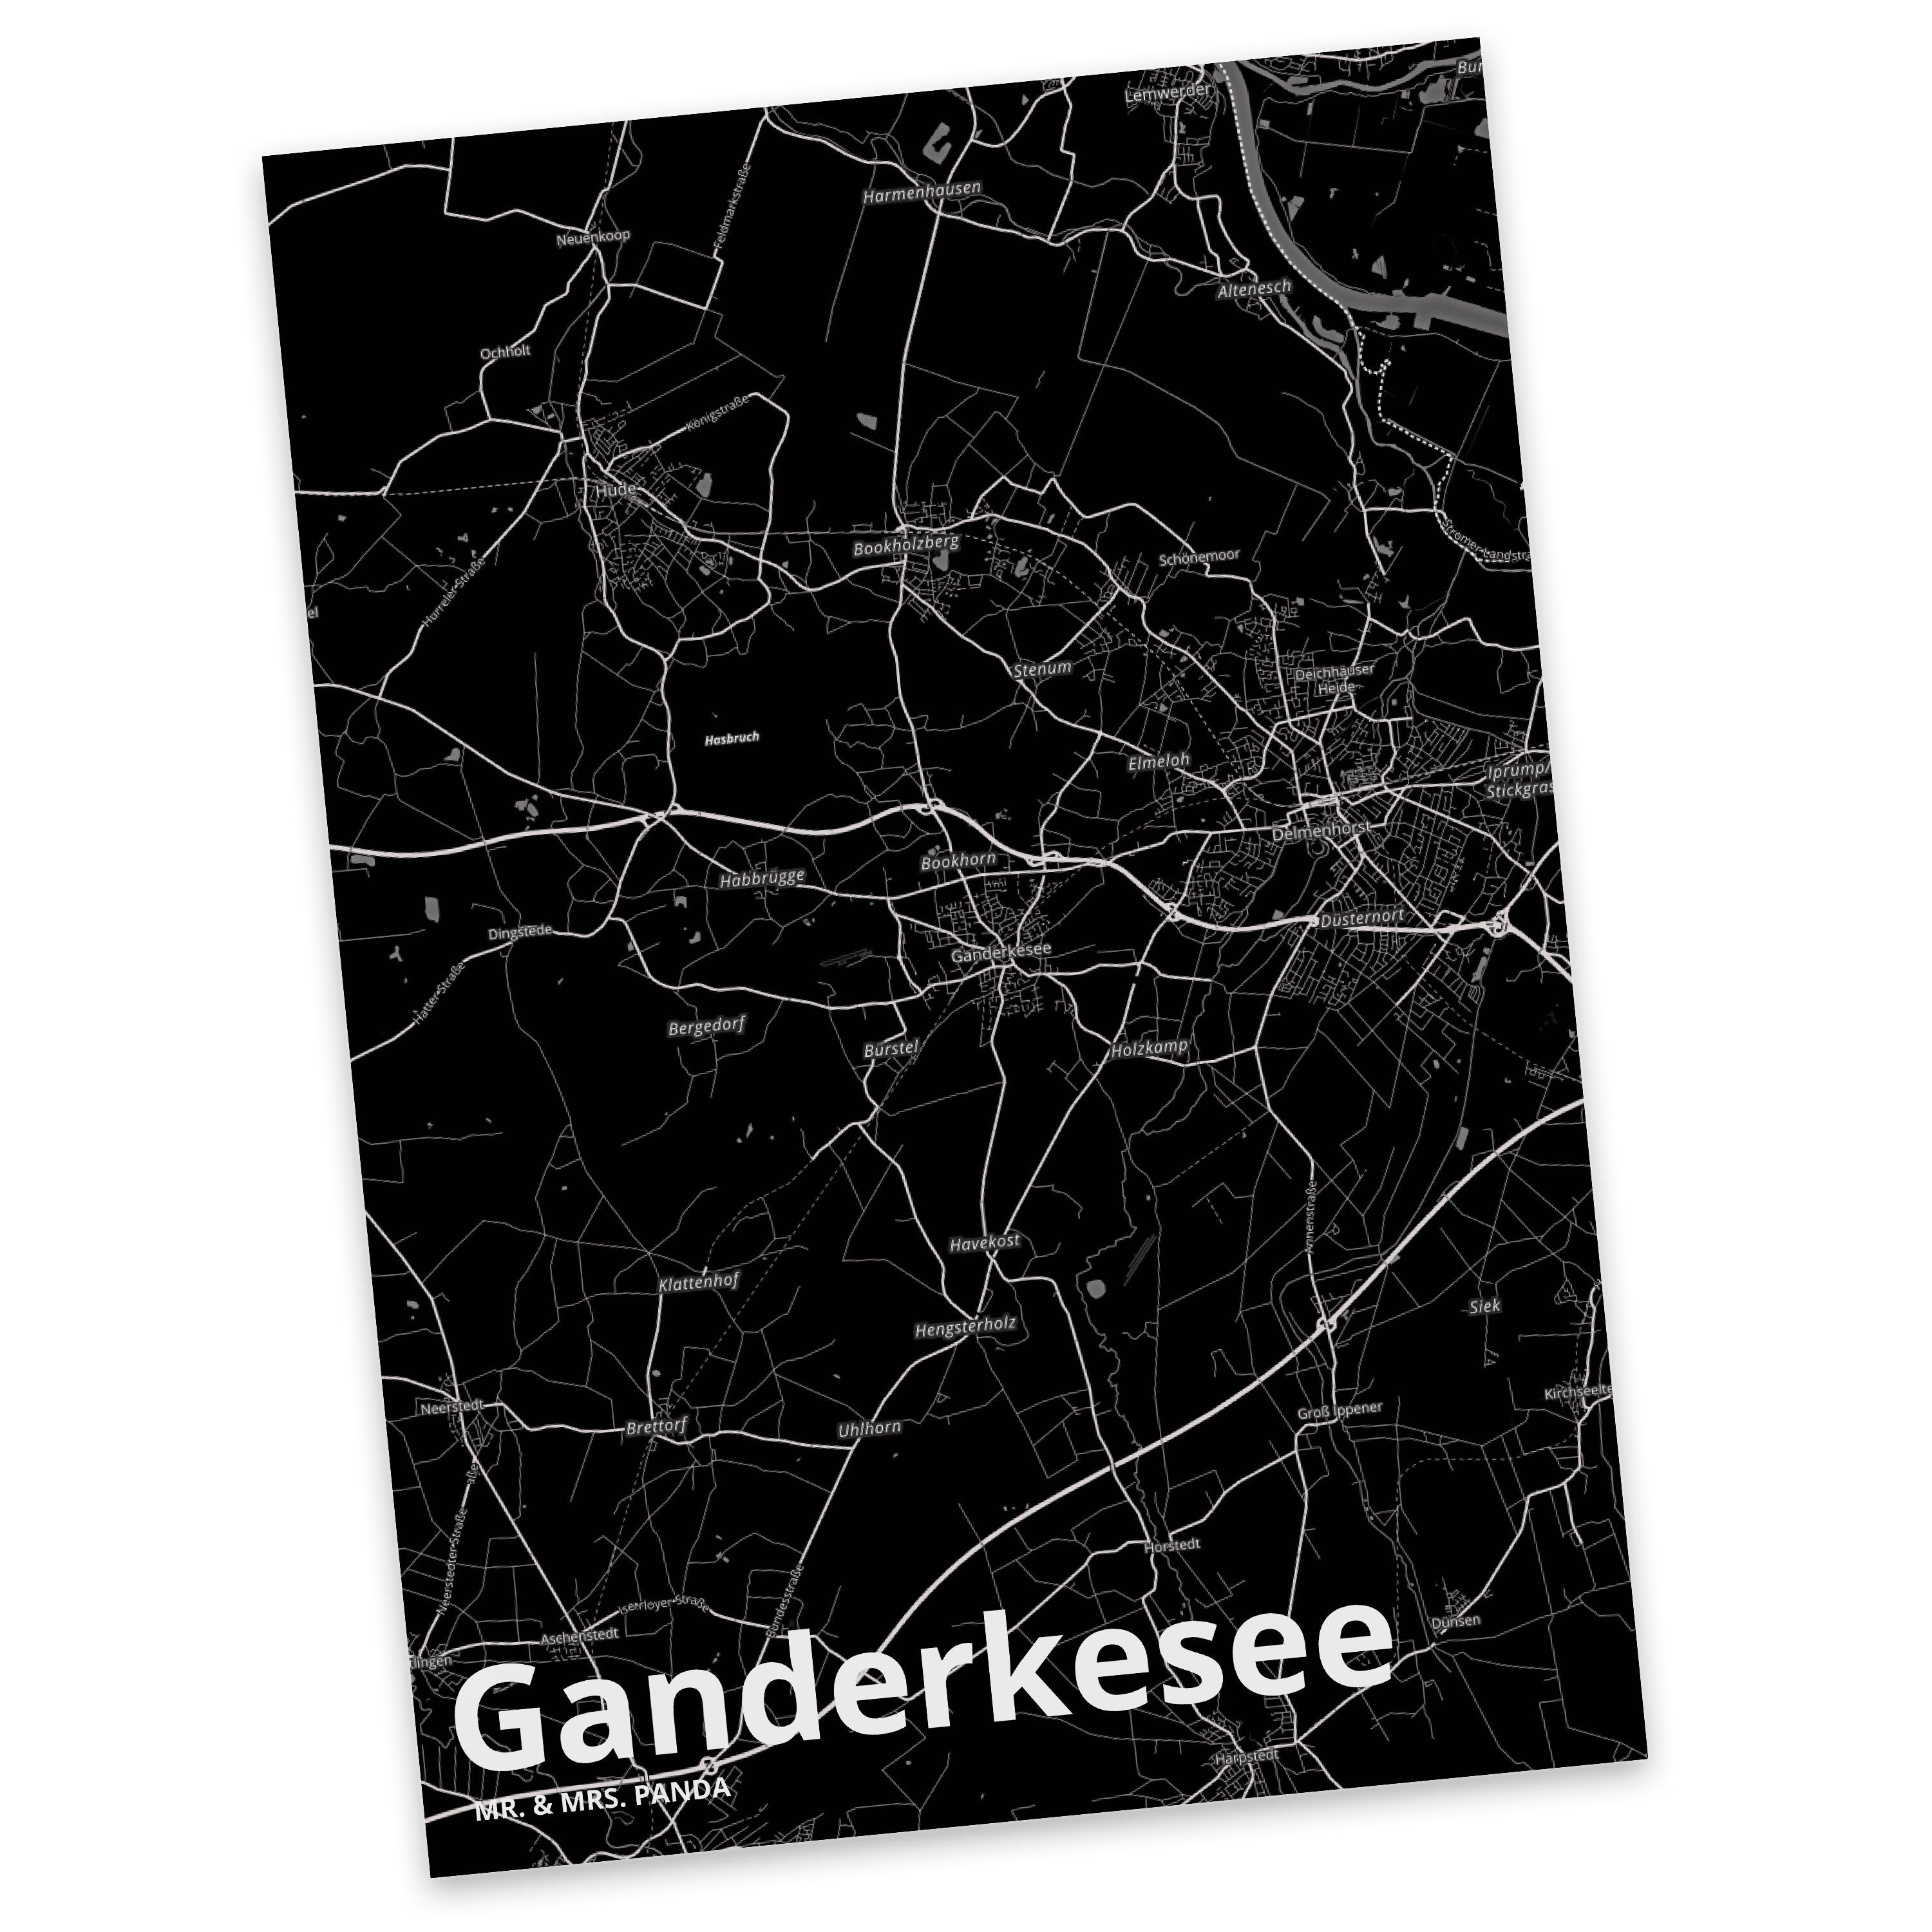 Mr. & Mrs. Panda Postkarte Ganderkesee - Geschenk, Dorf, Stadt, Einladungskarte, Grußkarte, Gesc